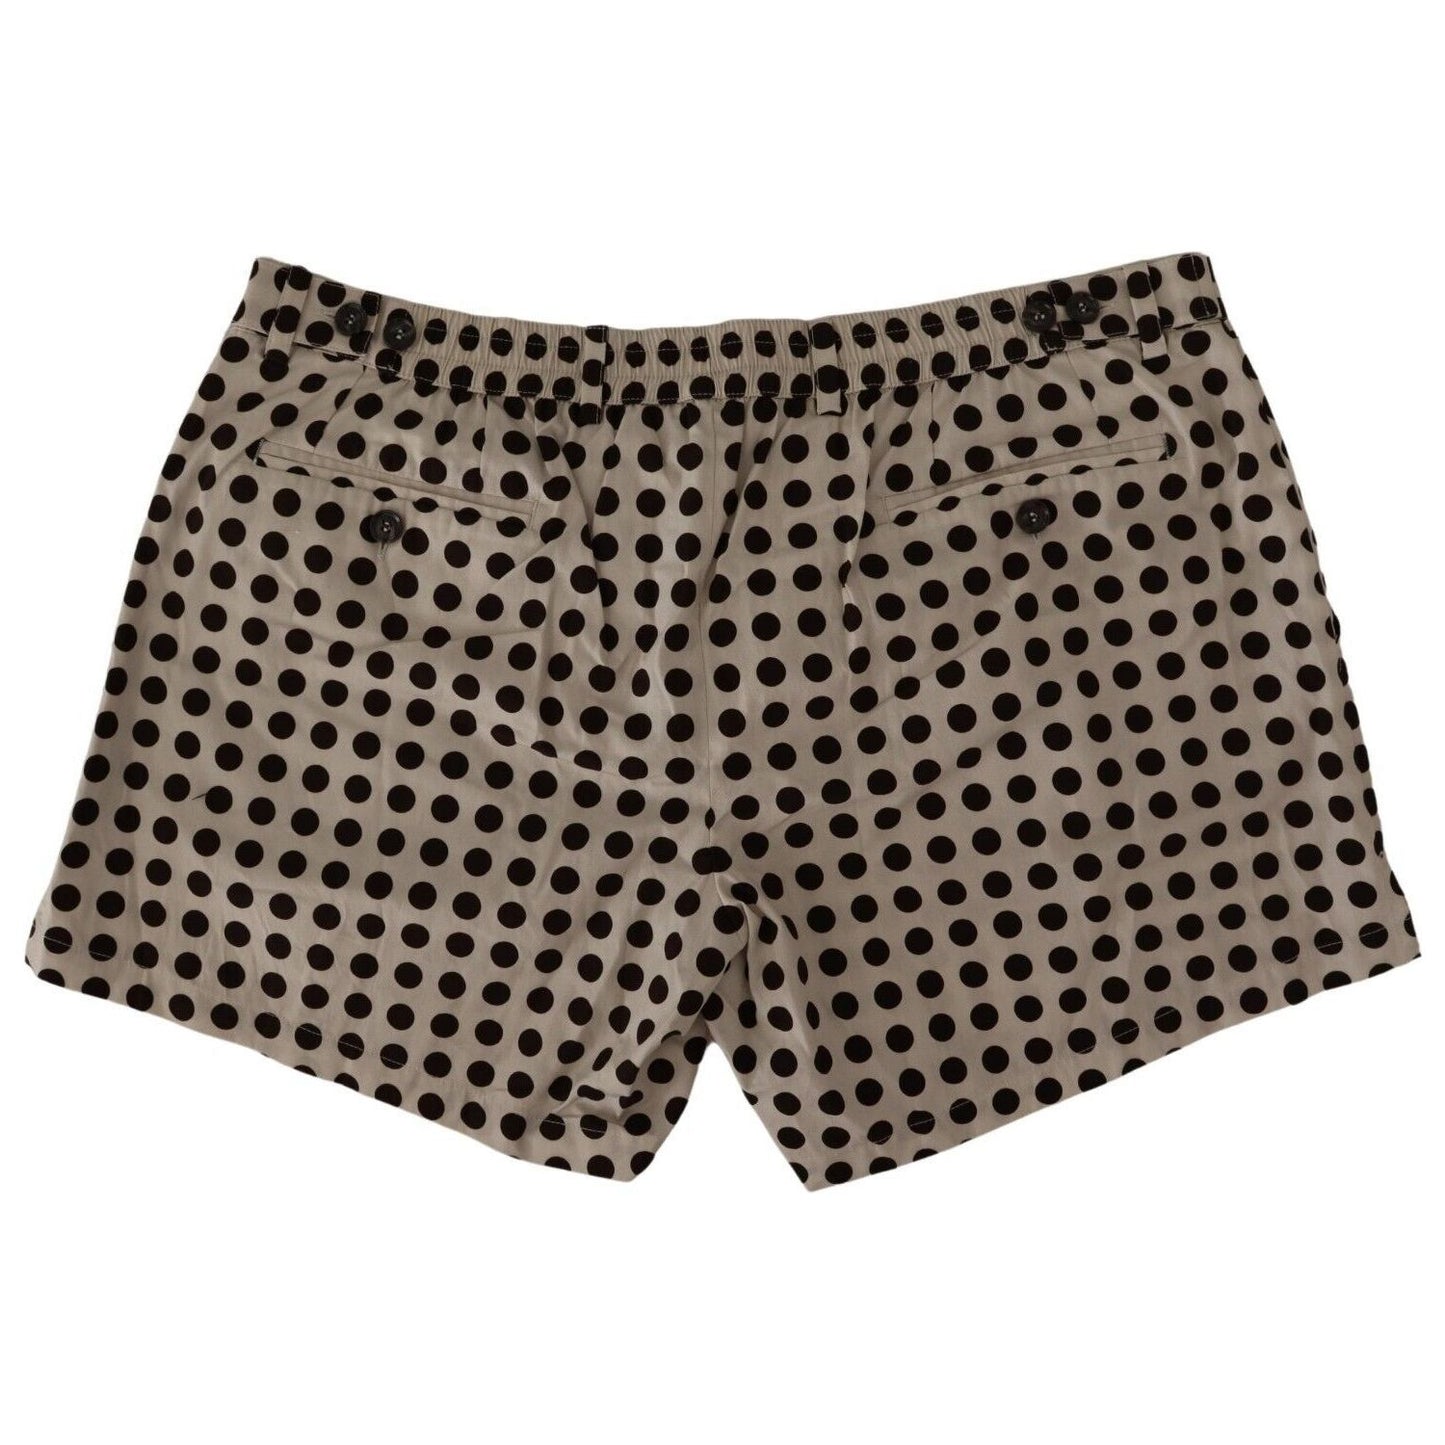 Dolce & Gabbana Elegant Polka Dot Cotton Shorts black-white-polka-dots-cotton-linen-shorts s-l1600-1-20-79a0f74a-98b.jpg